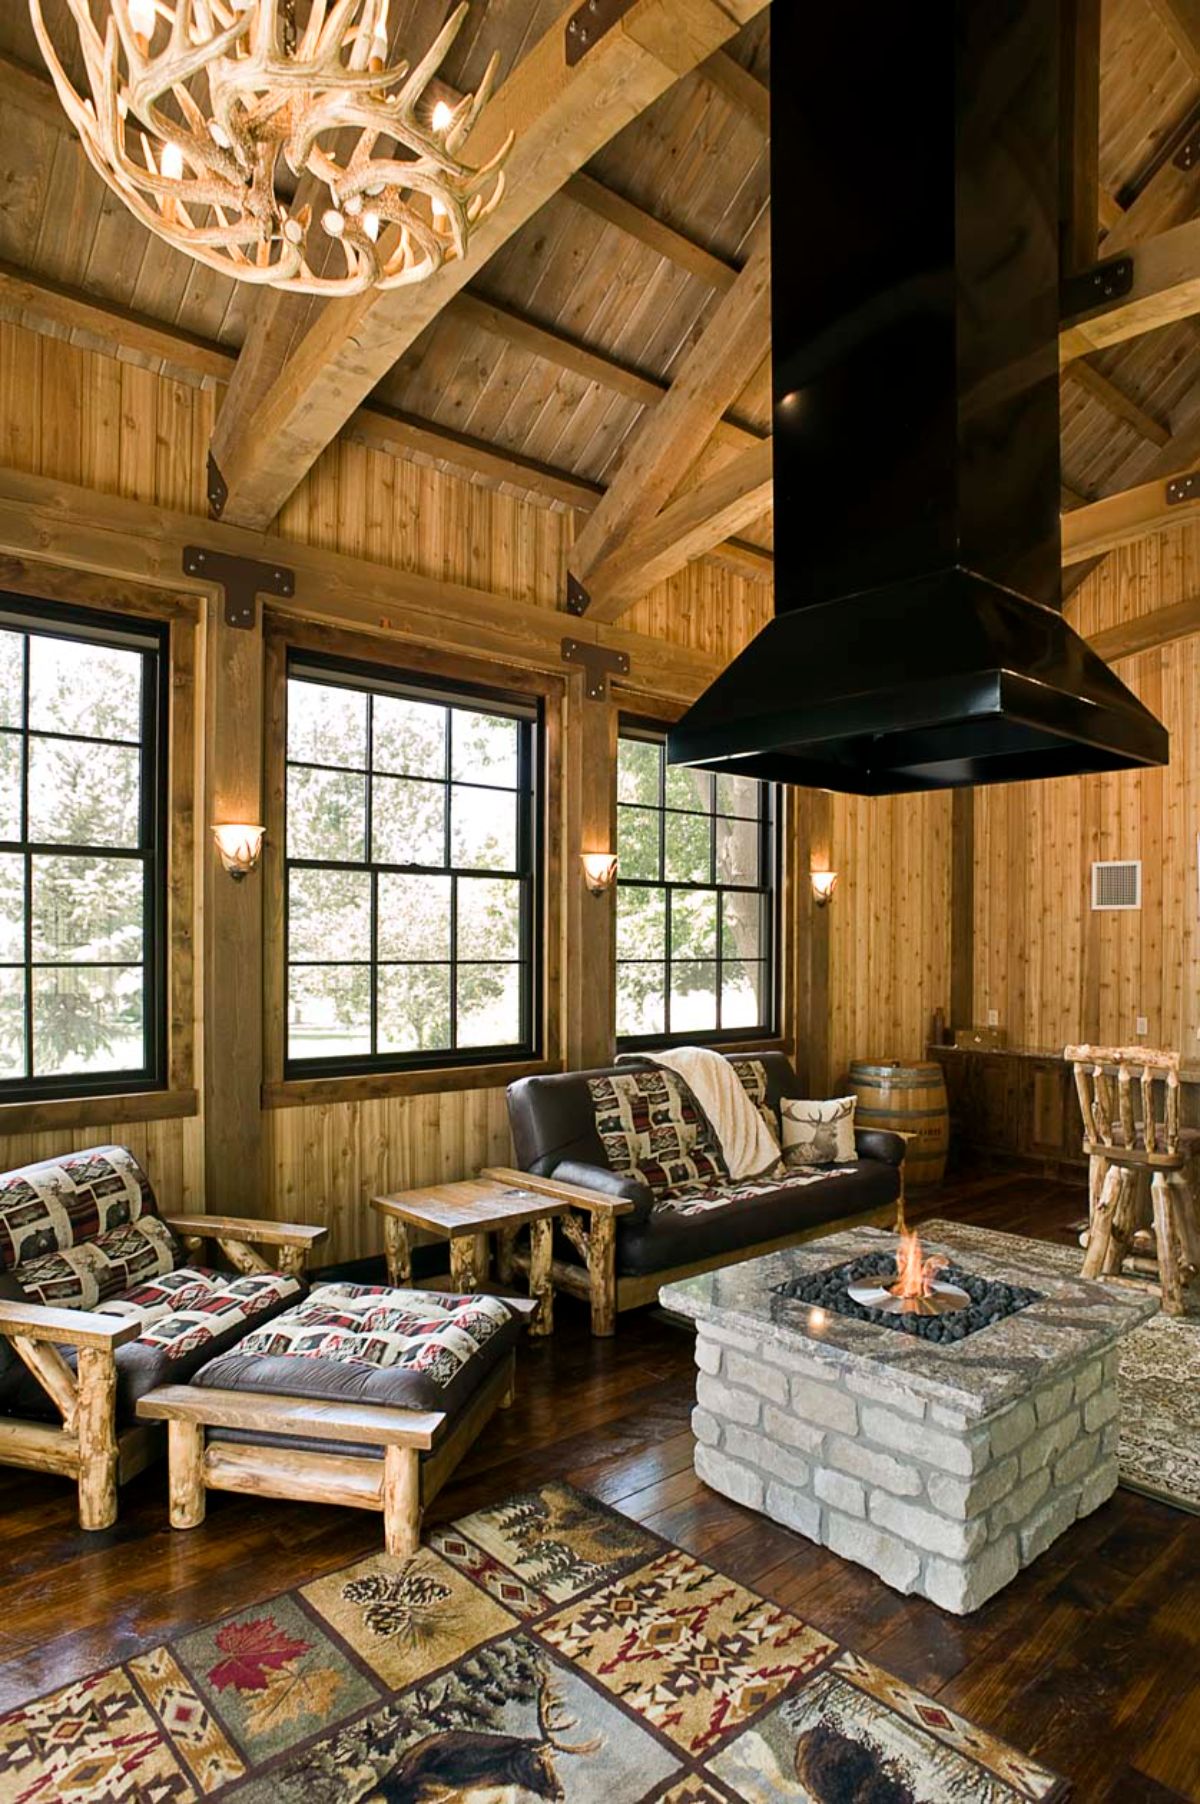 hanging vent hood in center of room over fire pit inside cabin